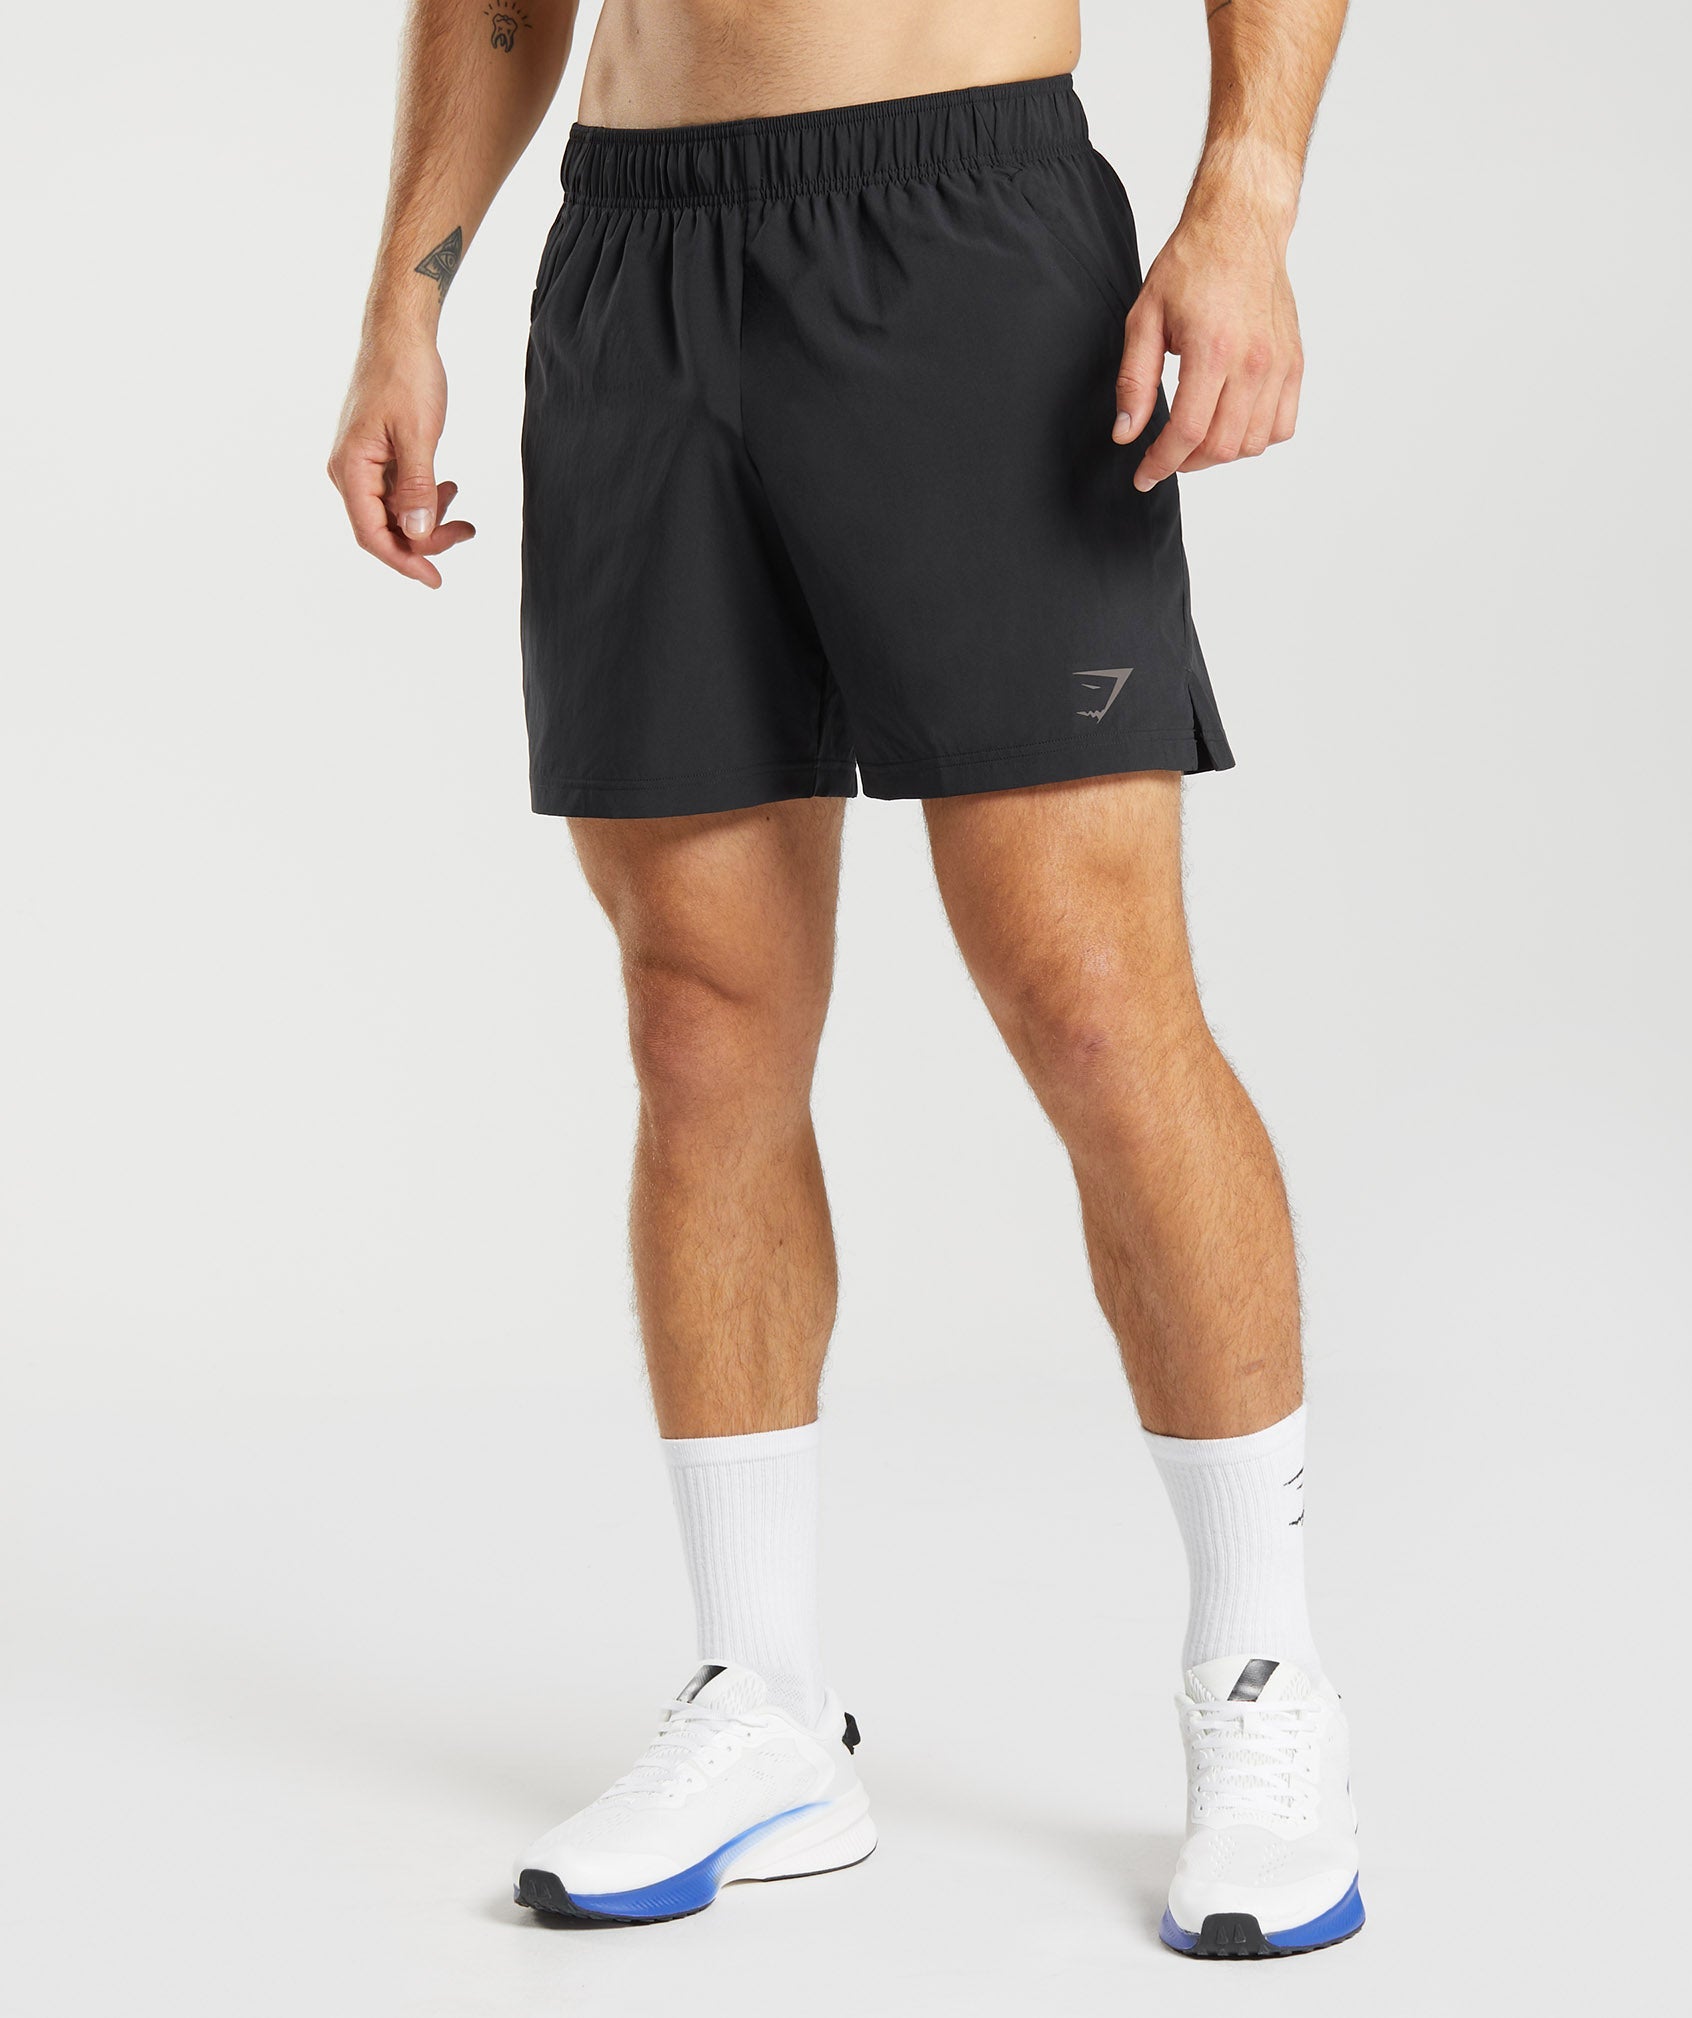 Gymshark Lifting Mesh 7 Shorts - Black